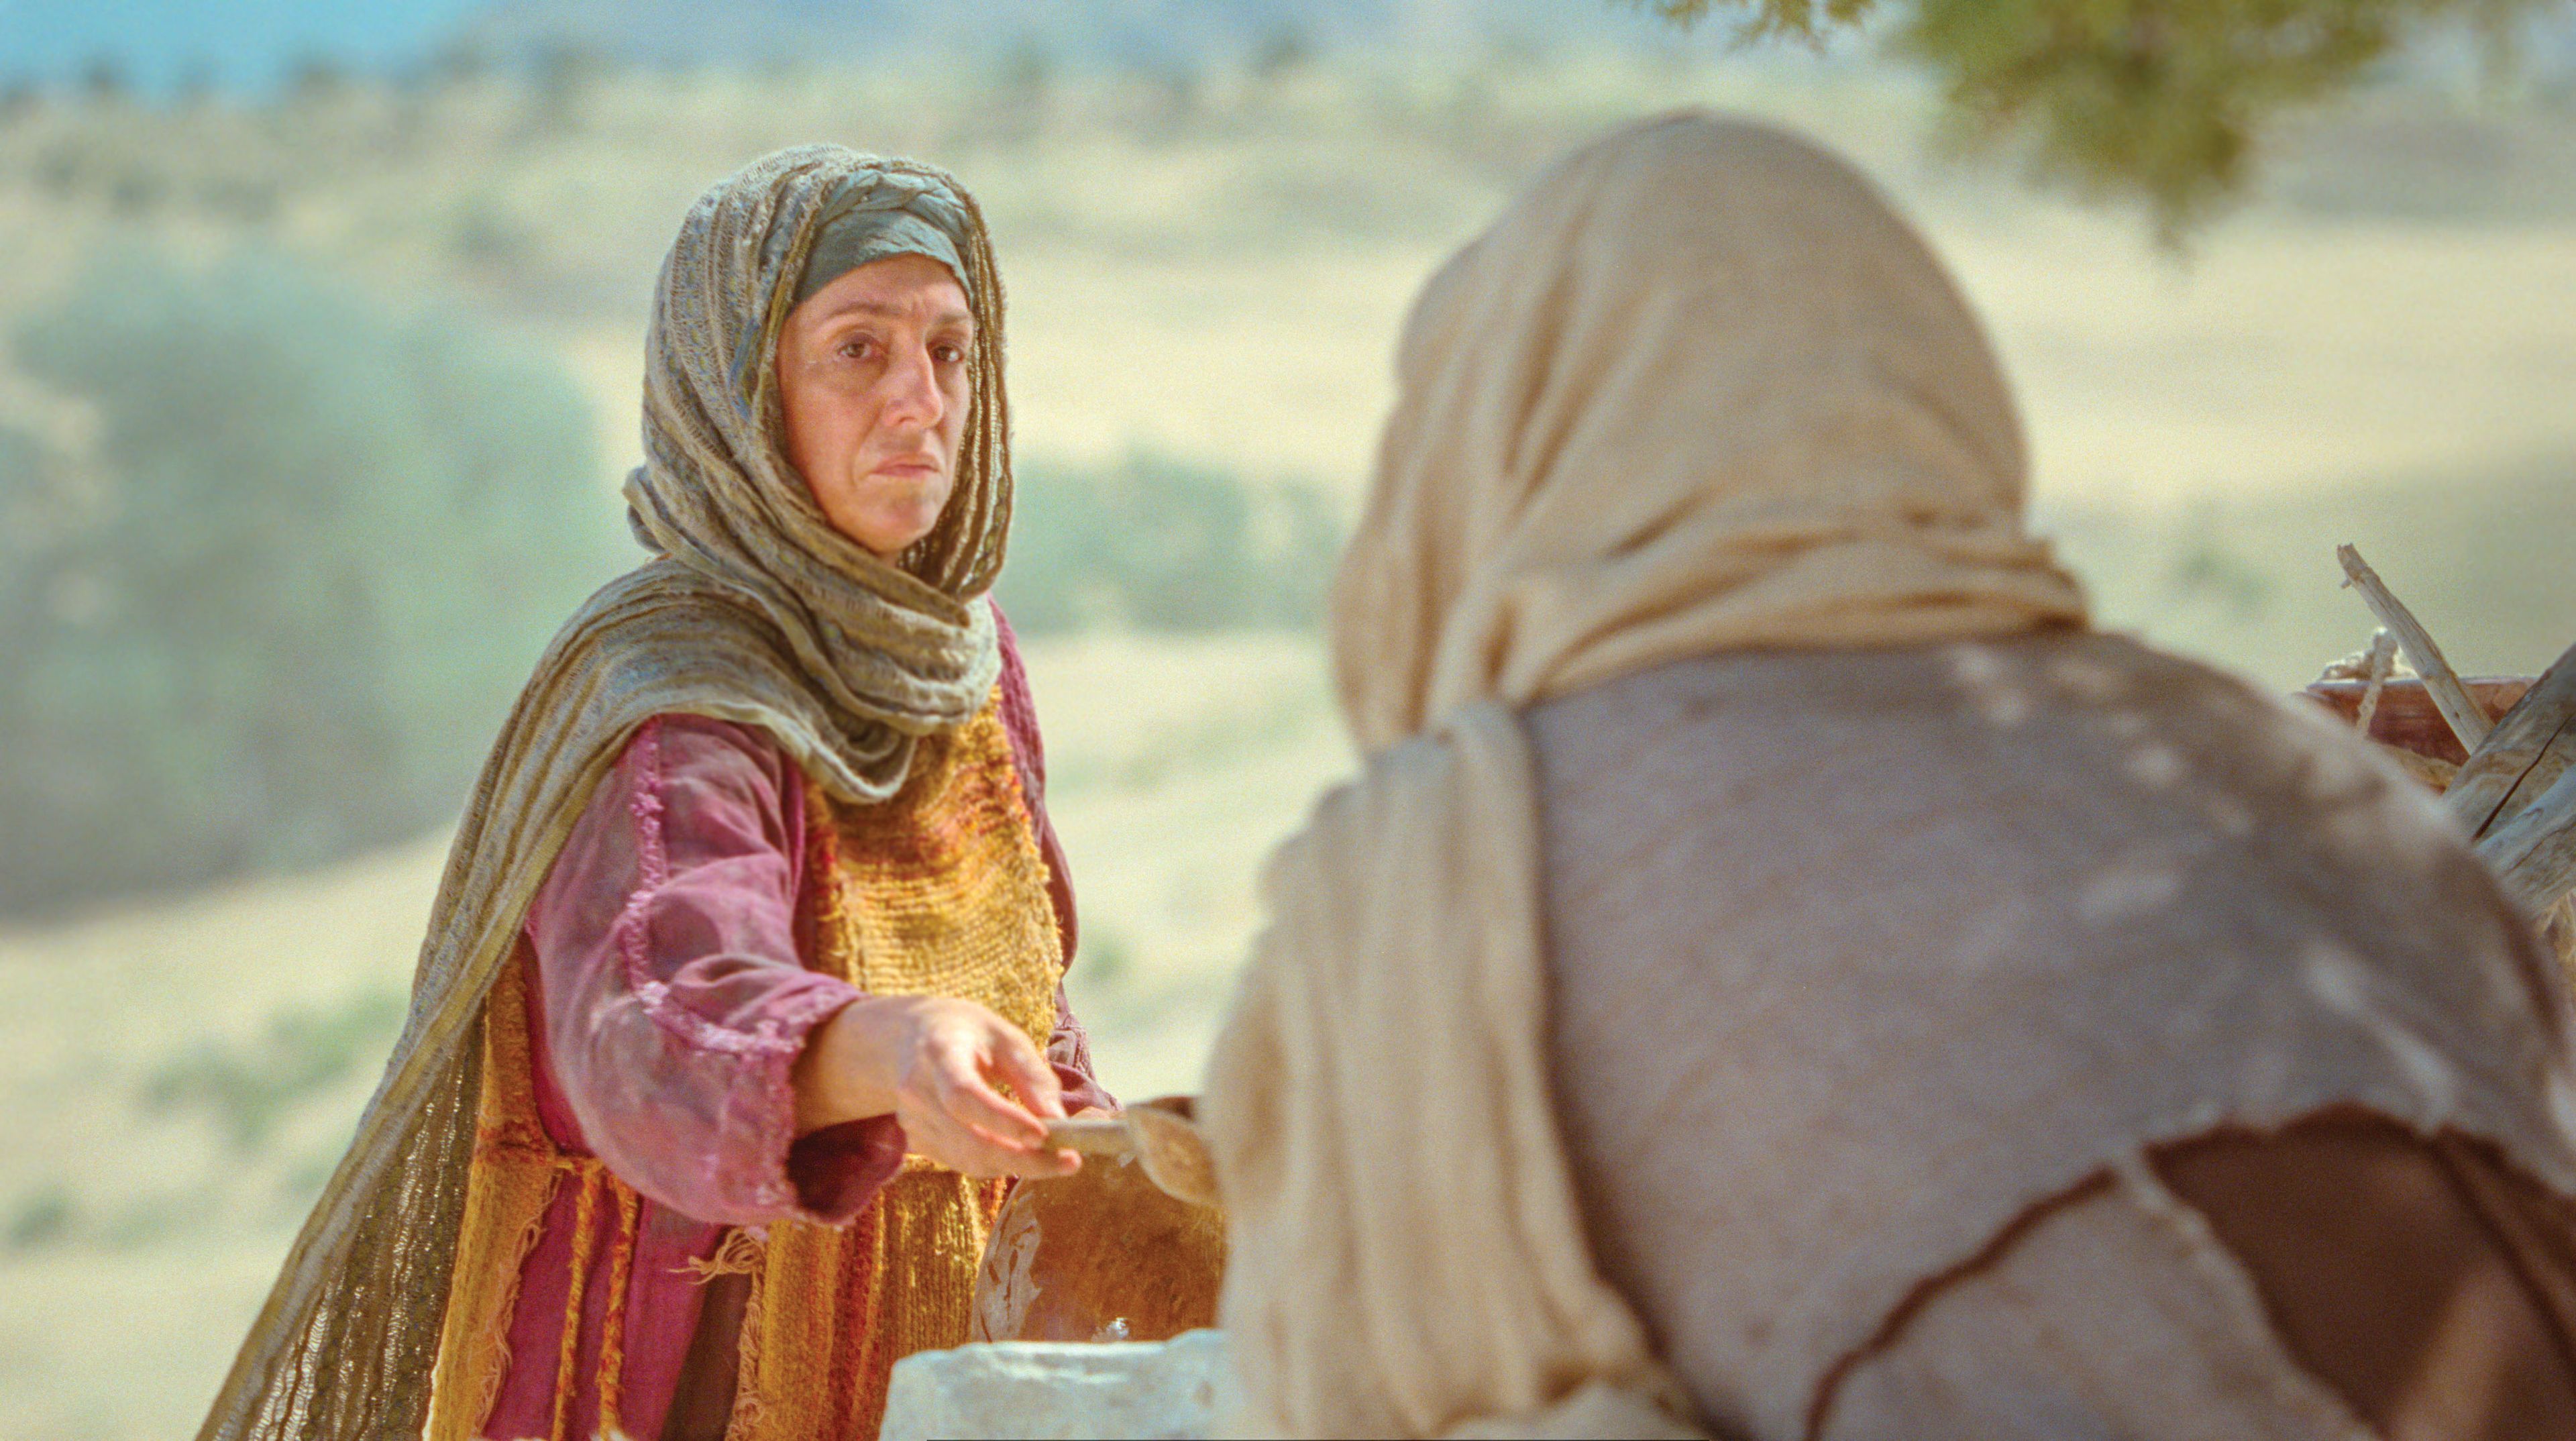 The Samaritan woman gives Jesus drink.